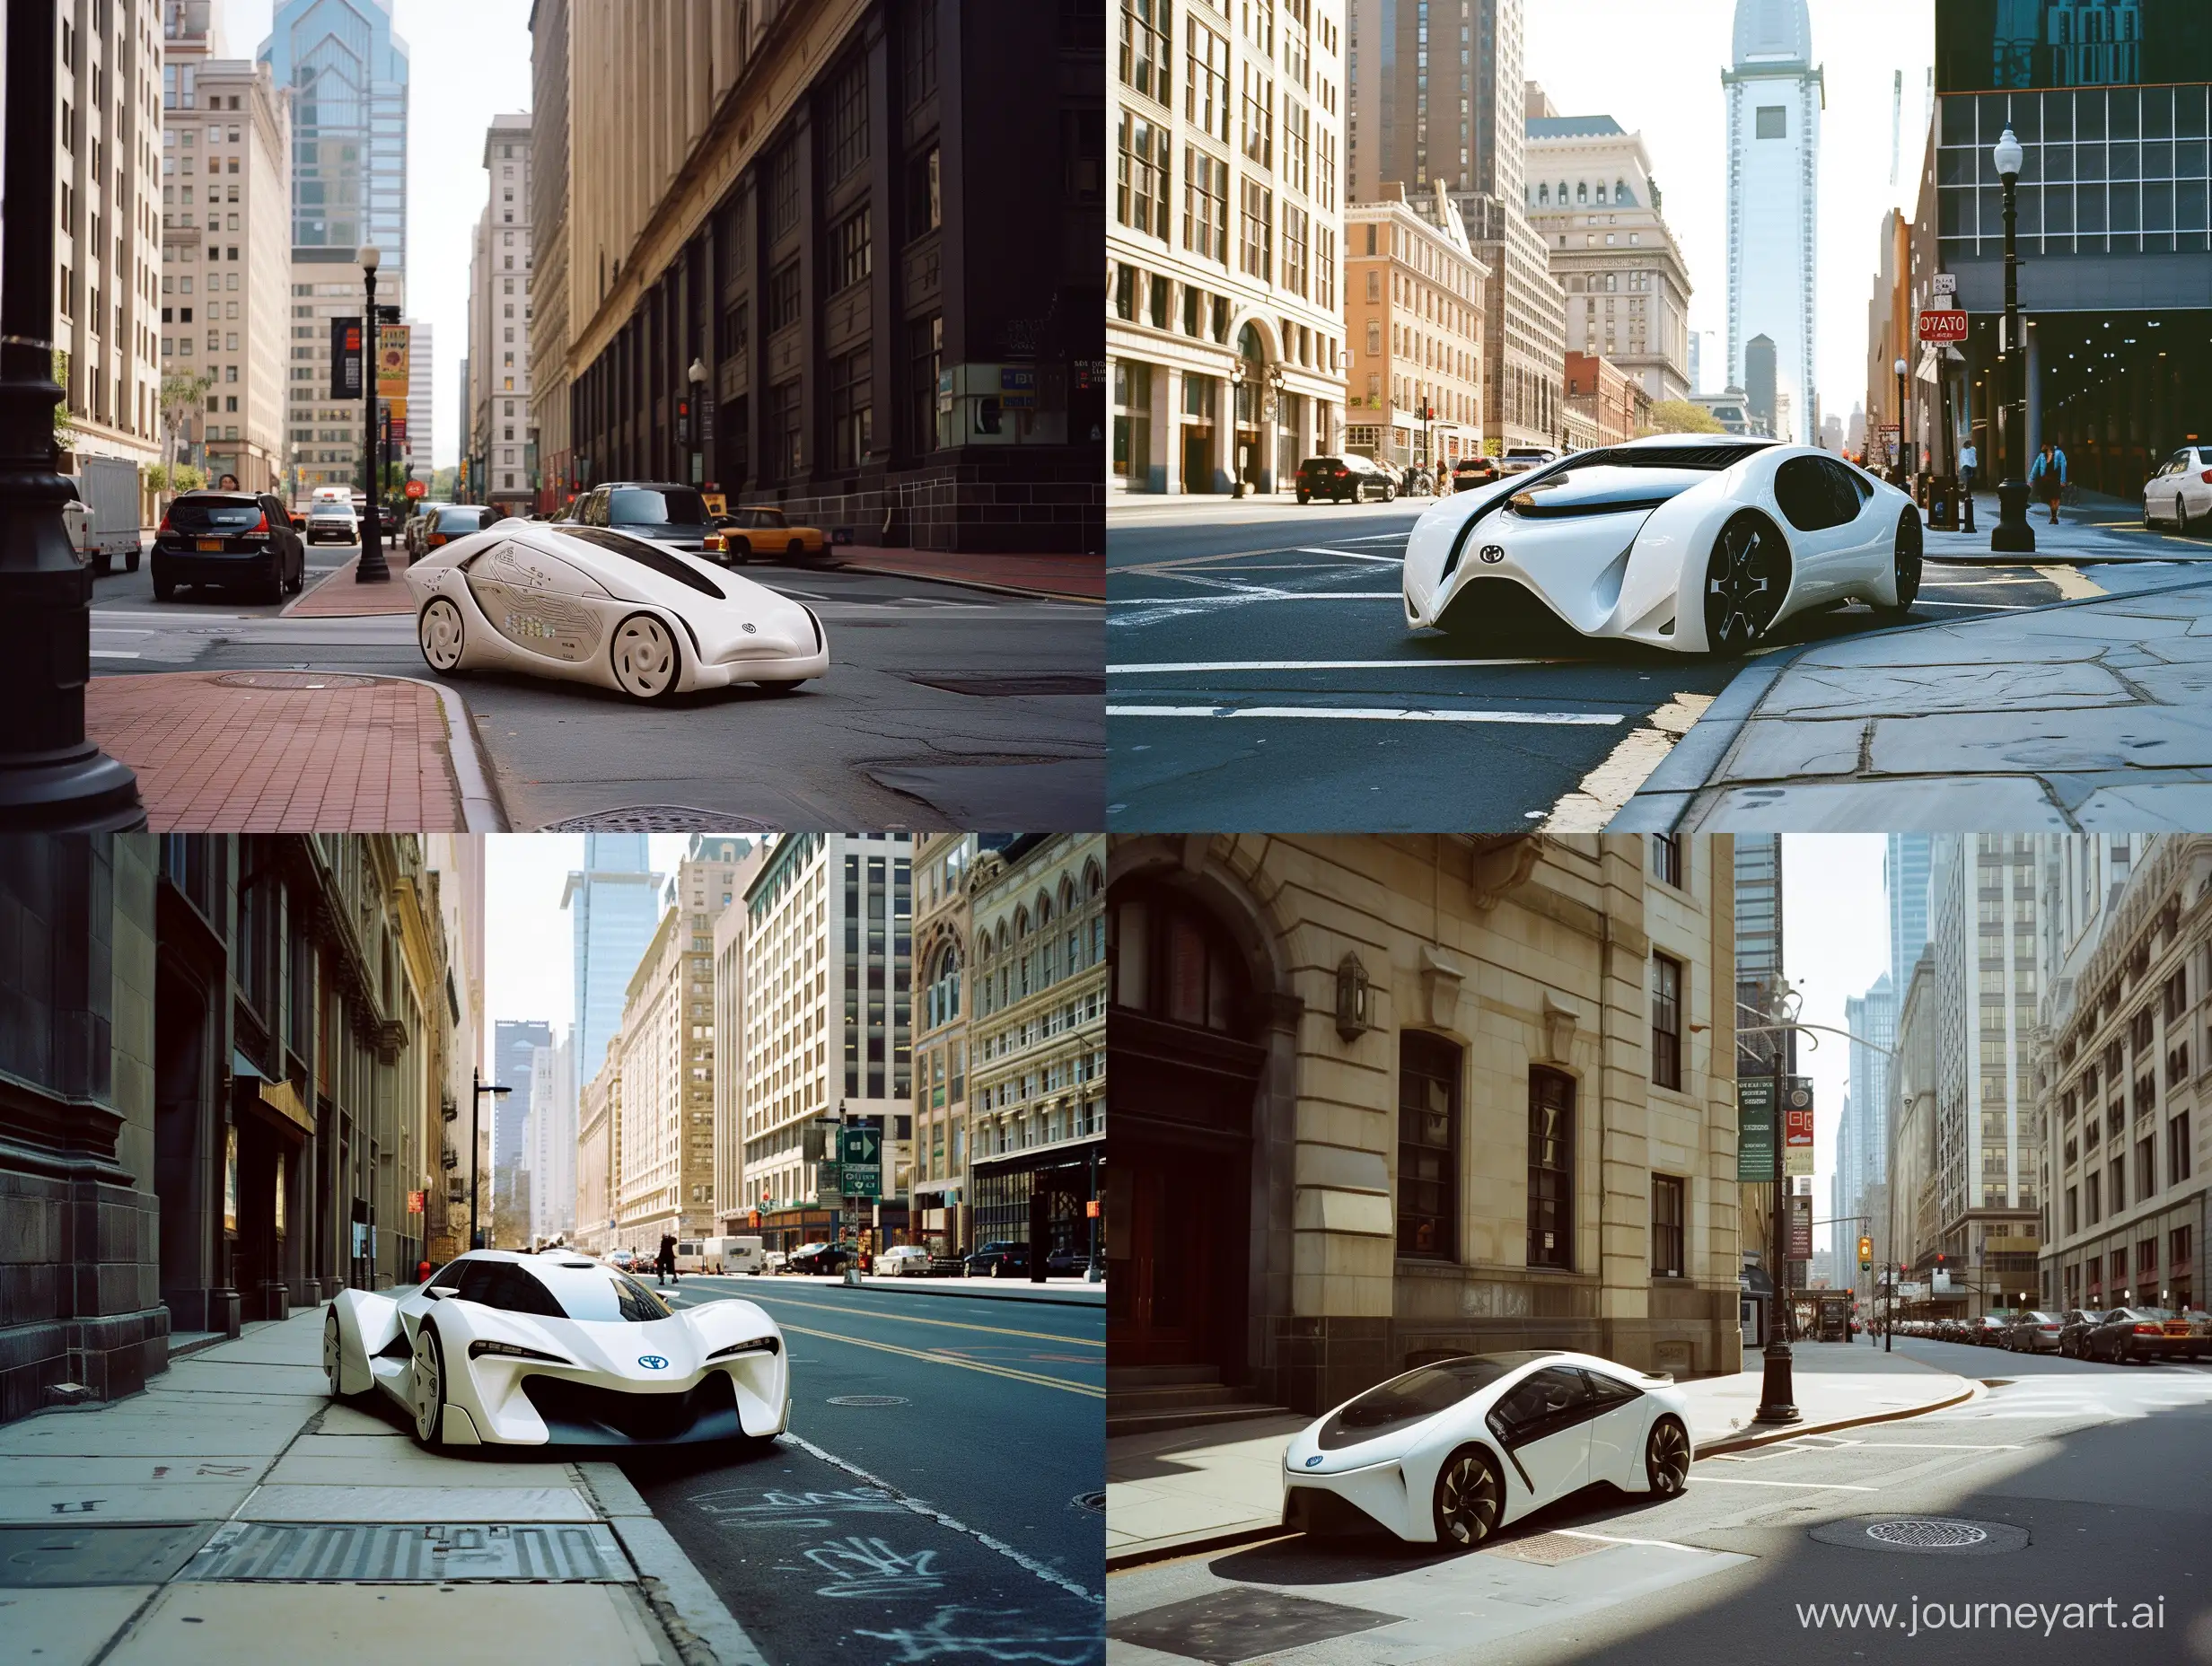 Futuristic-White-Autonomous-Toyota-Car-in-Urban-Landscape